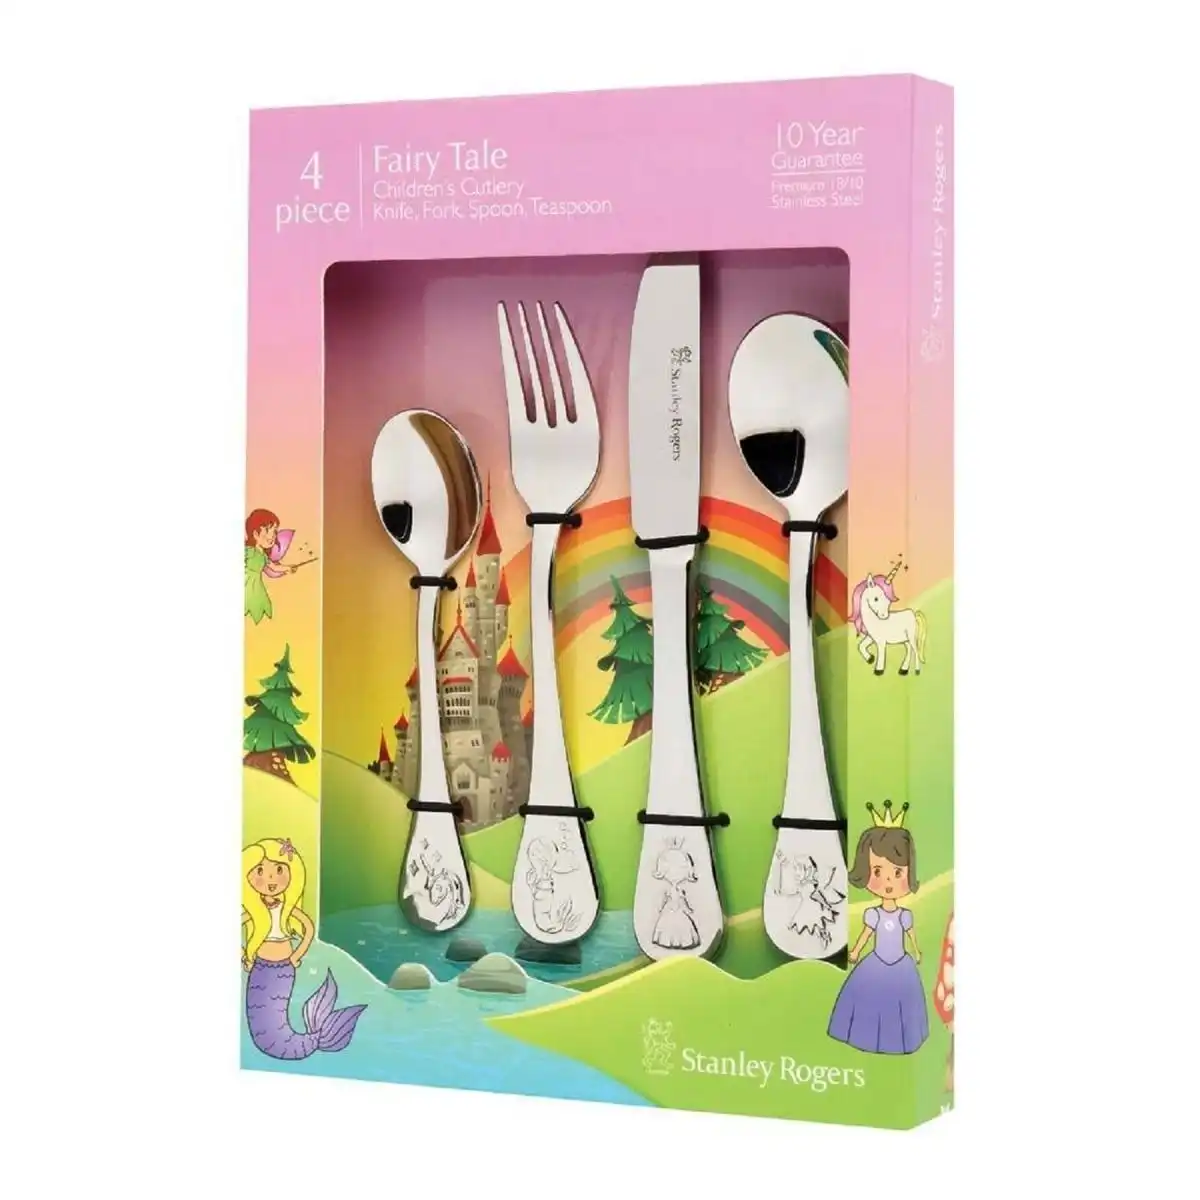 Stanley Rogers Children's Cutlery Set   Fairy Tale